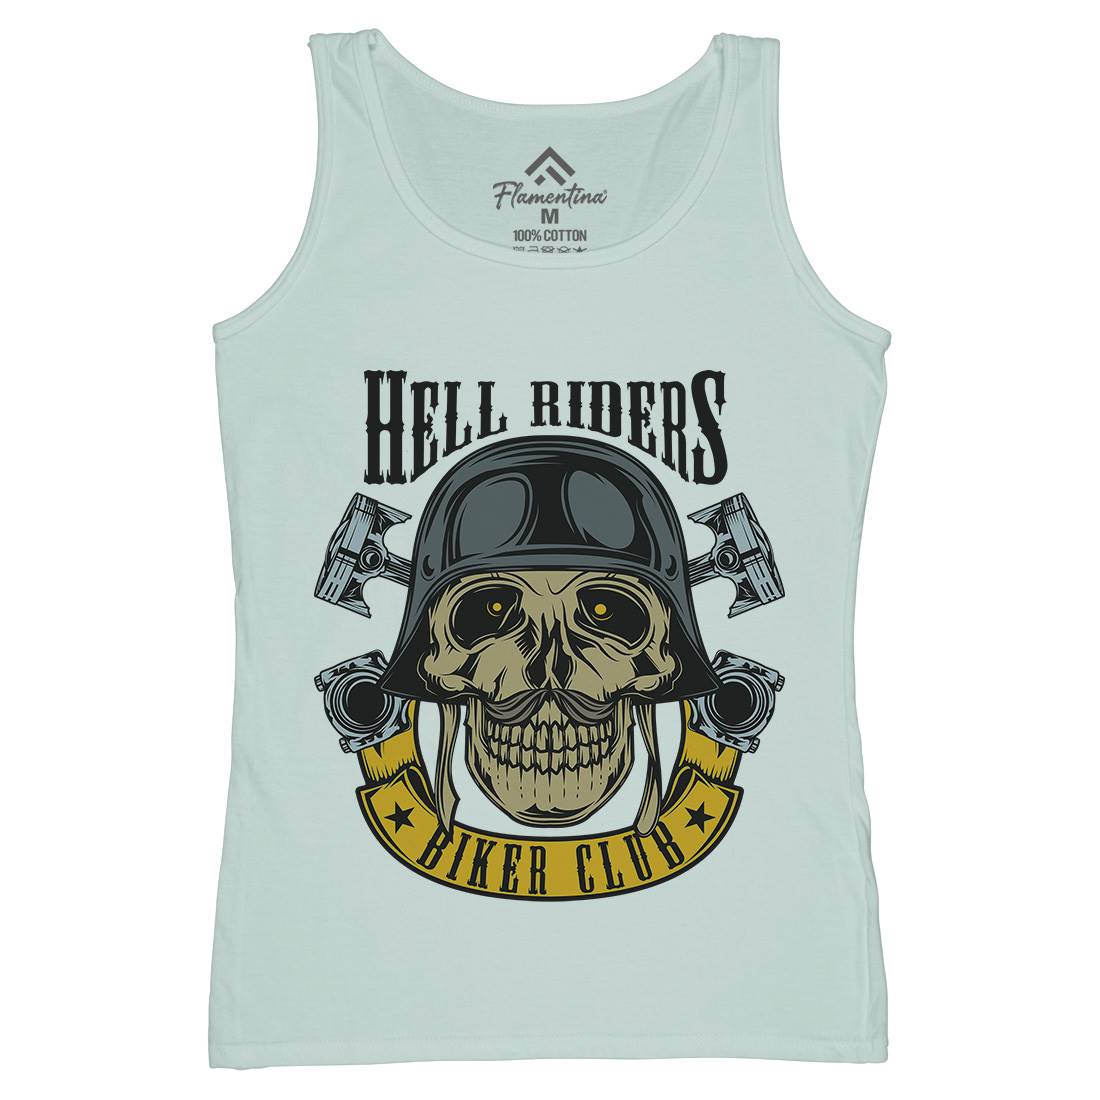 Hell Riders Womens Organic Tank Top Vest Motorcycles C889